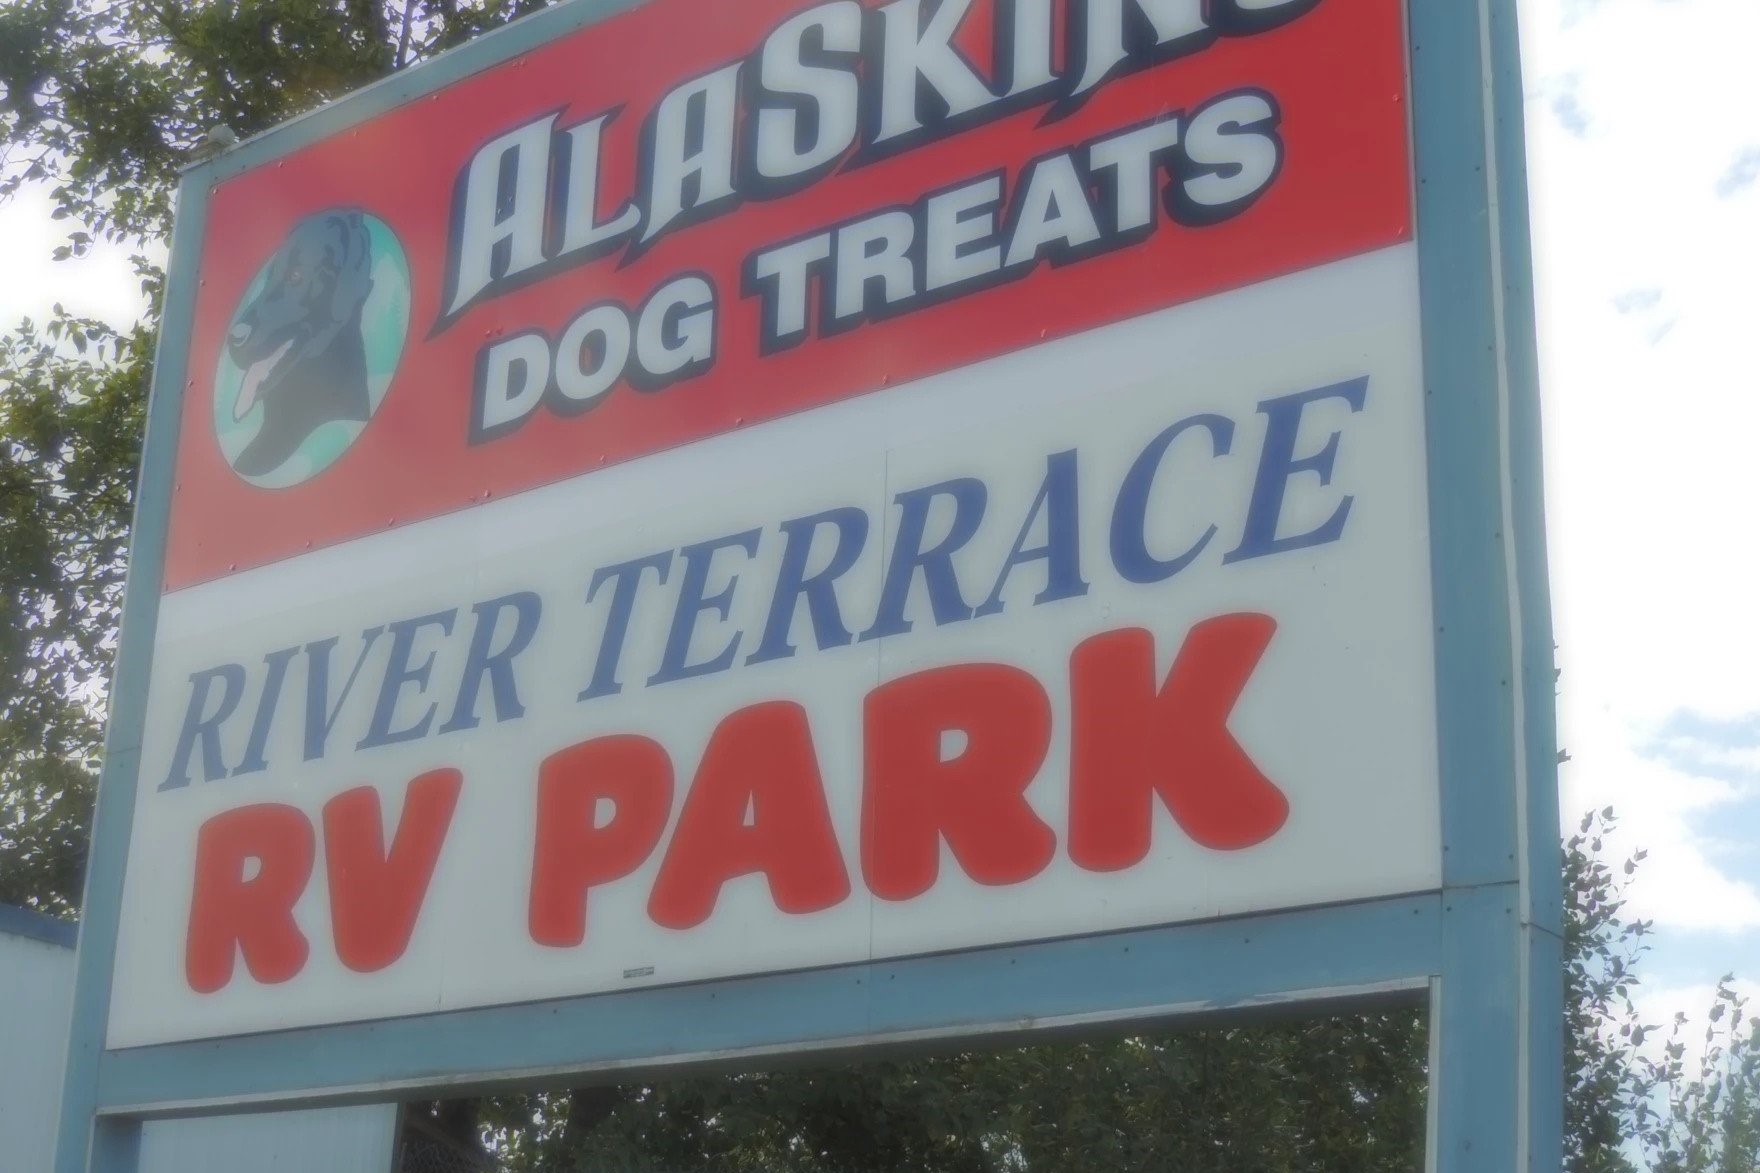 a sign says River Terrace RV Park